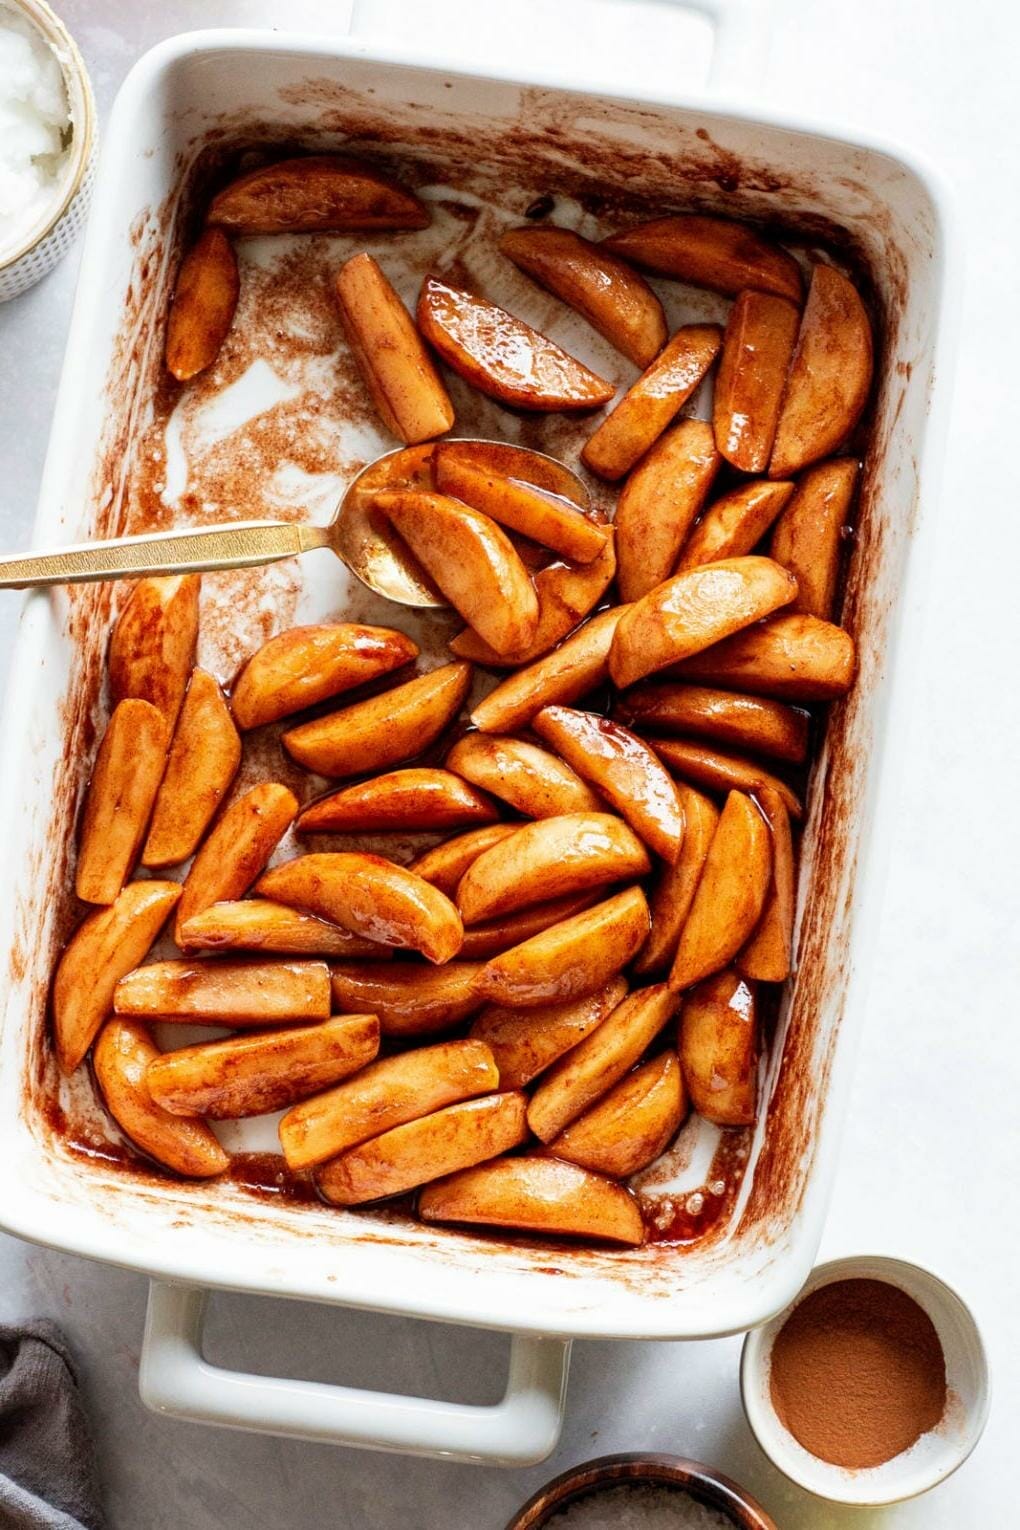 The Before Magic: Freshly Sliced Apples Awaiting Their Cinnamon Transformation.